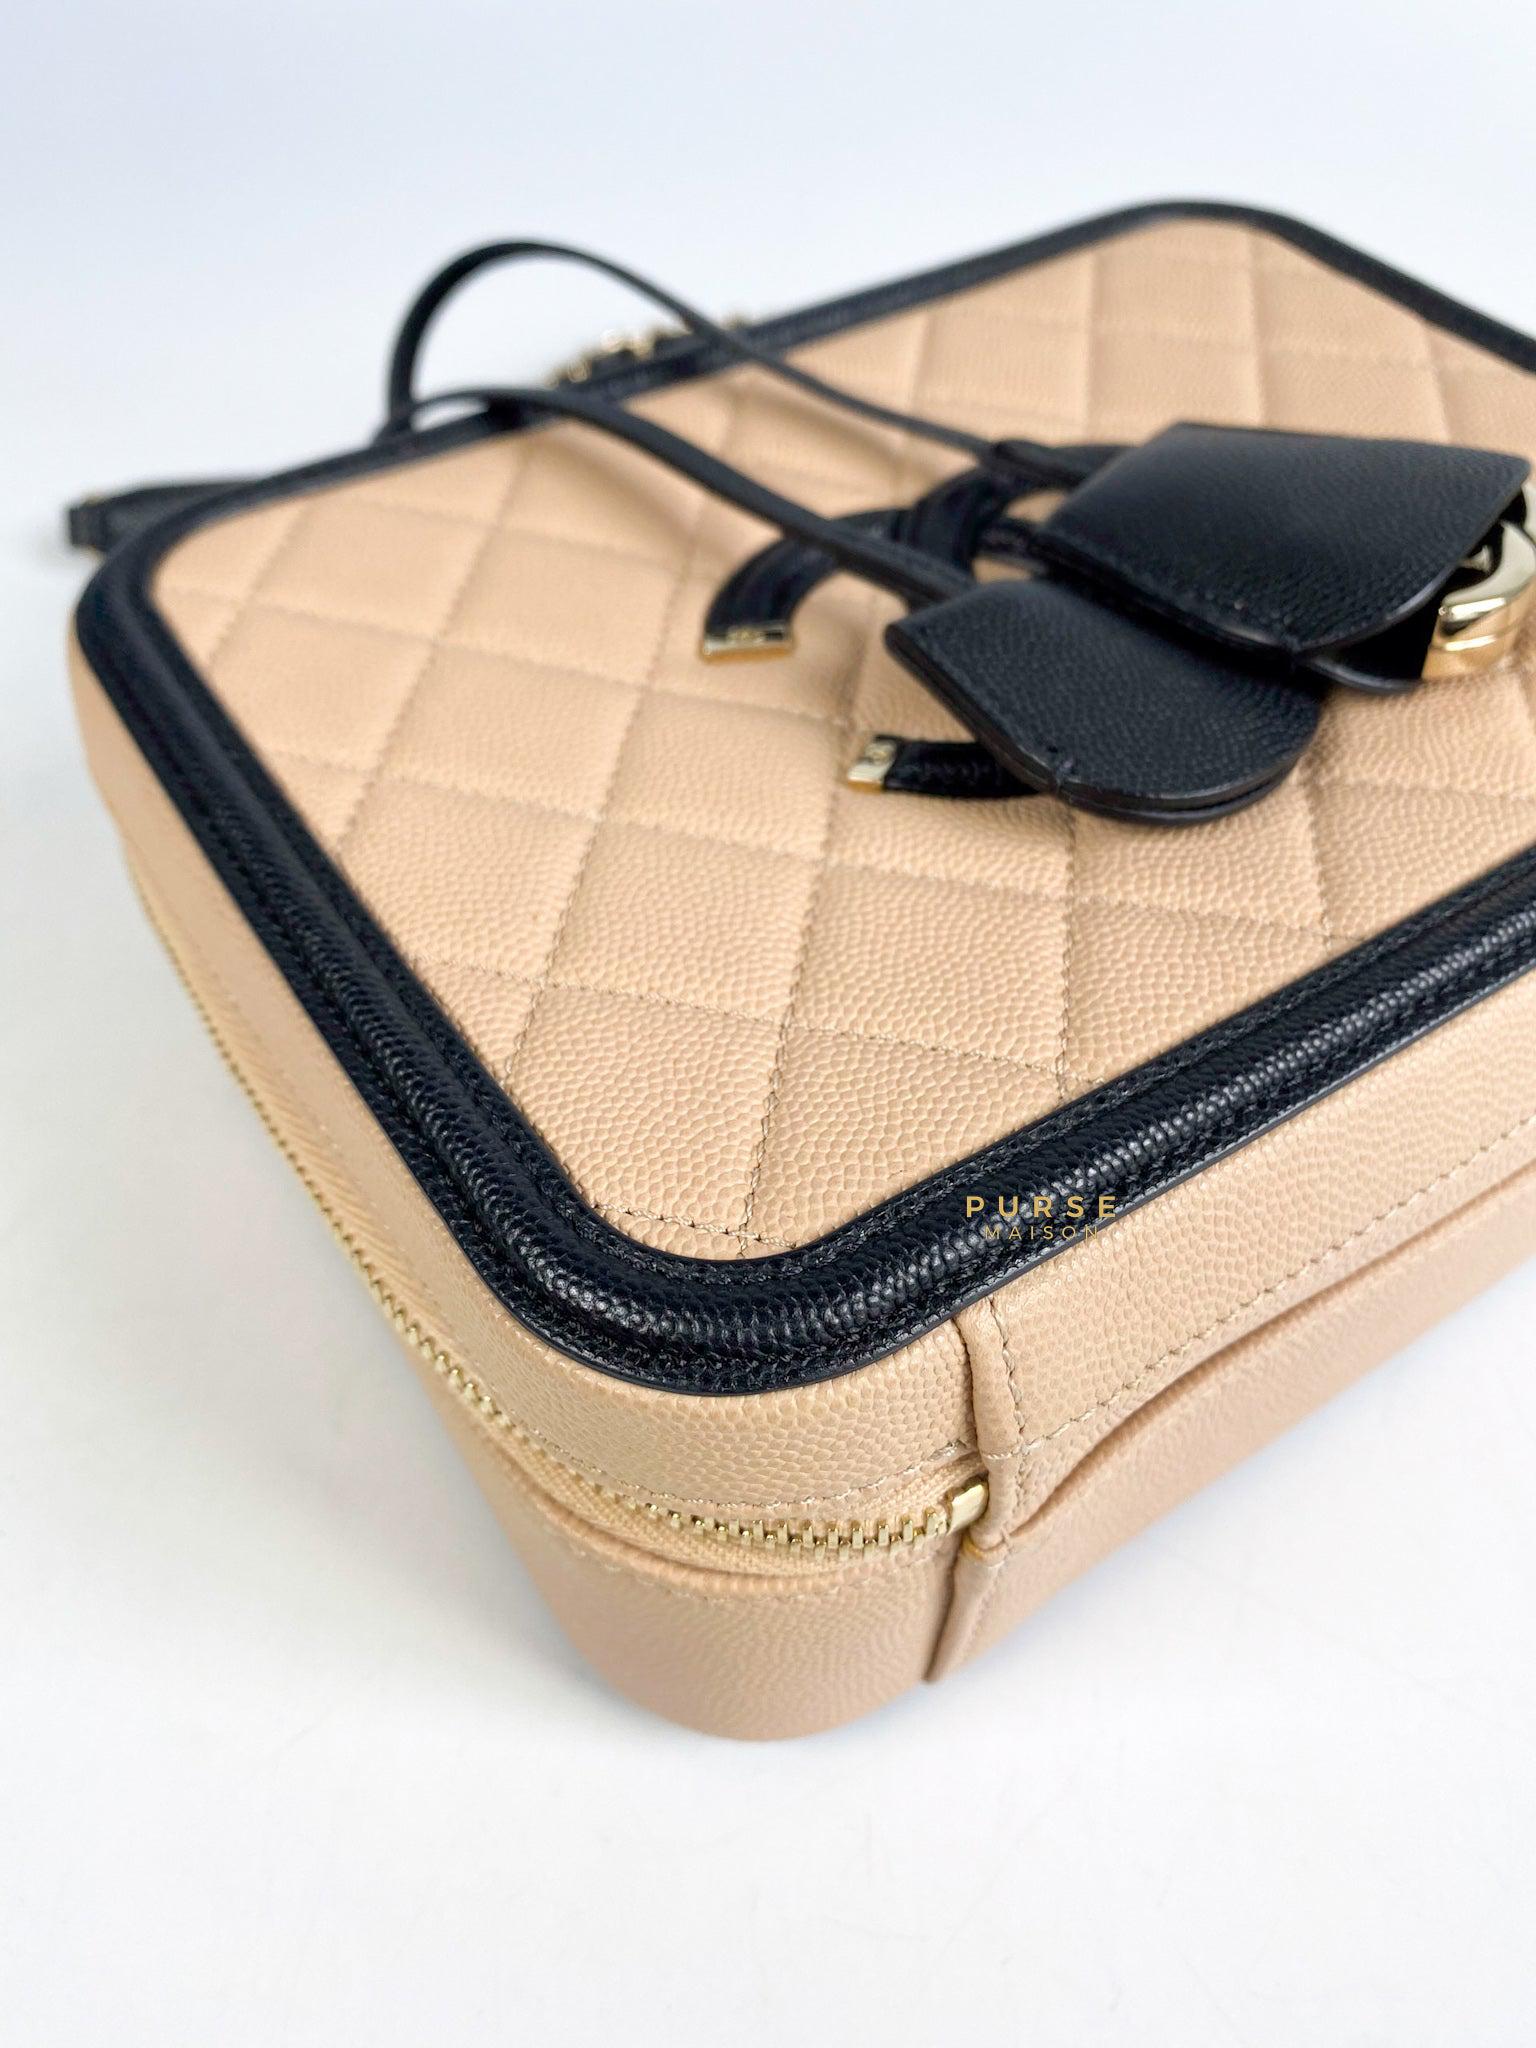 Chanel CC Filigree Medium Vanity Bag Beige/Black Caviar Leather in Light Gold Hardware Series 29